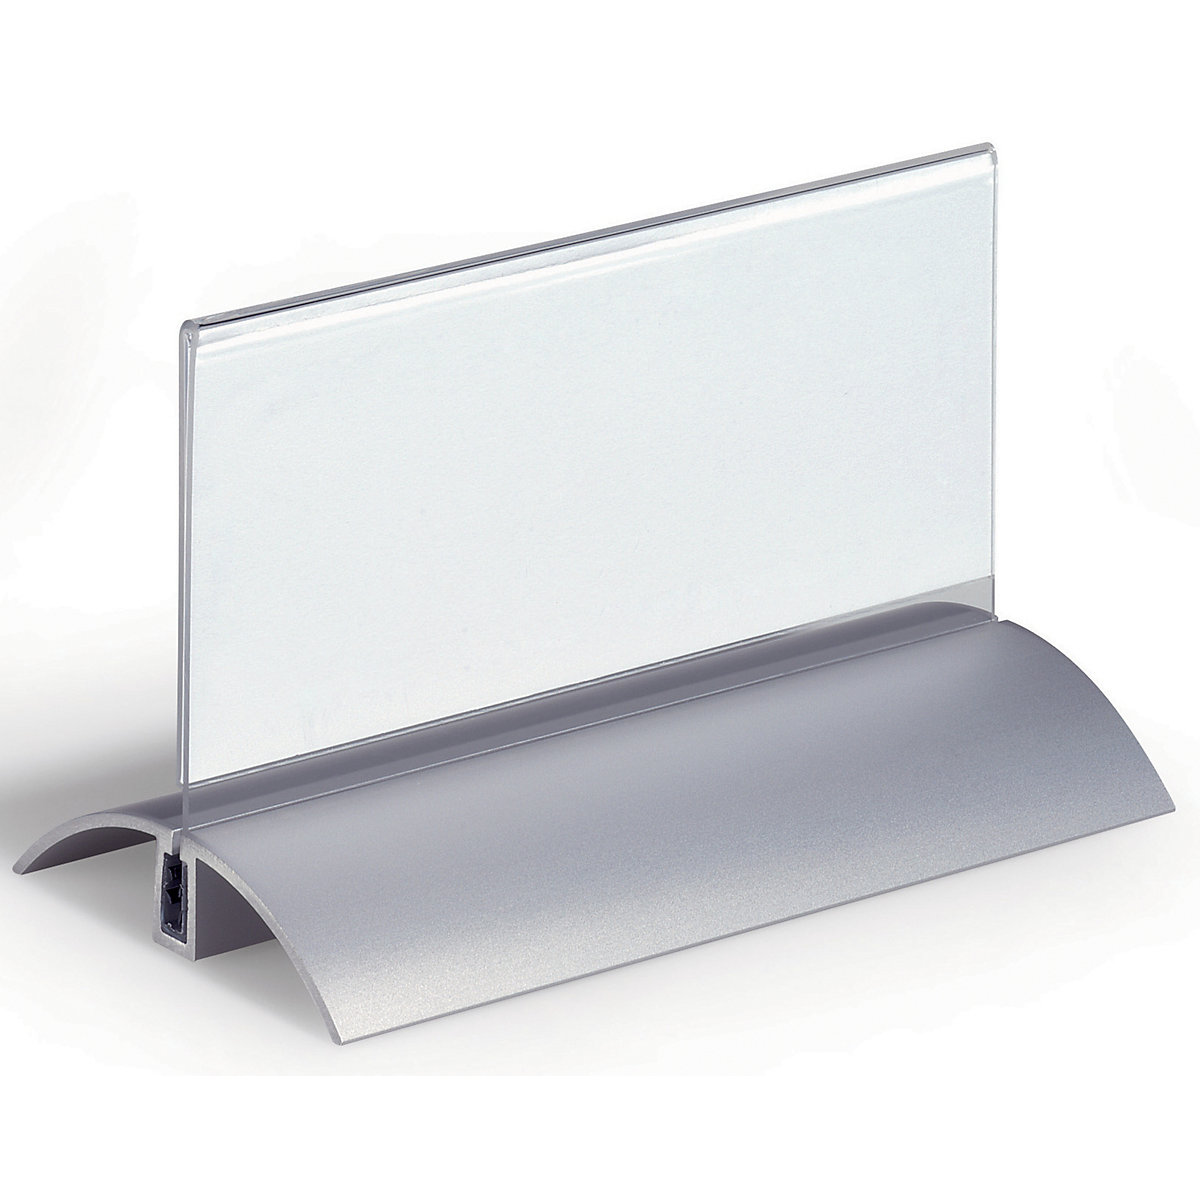 Table place name holder, acrylic, with aluminium base – DURABLE